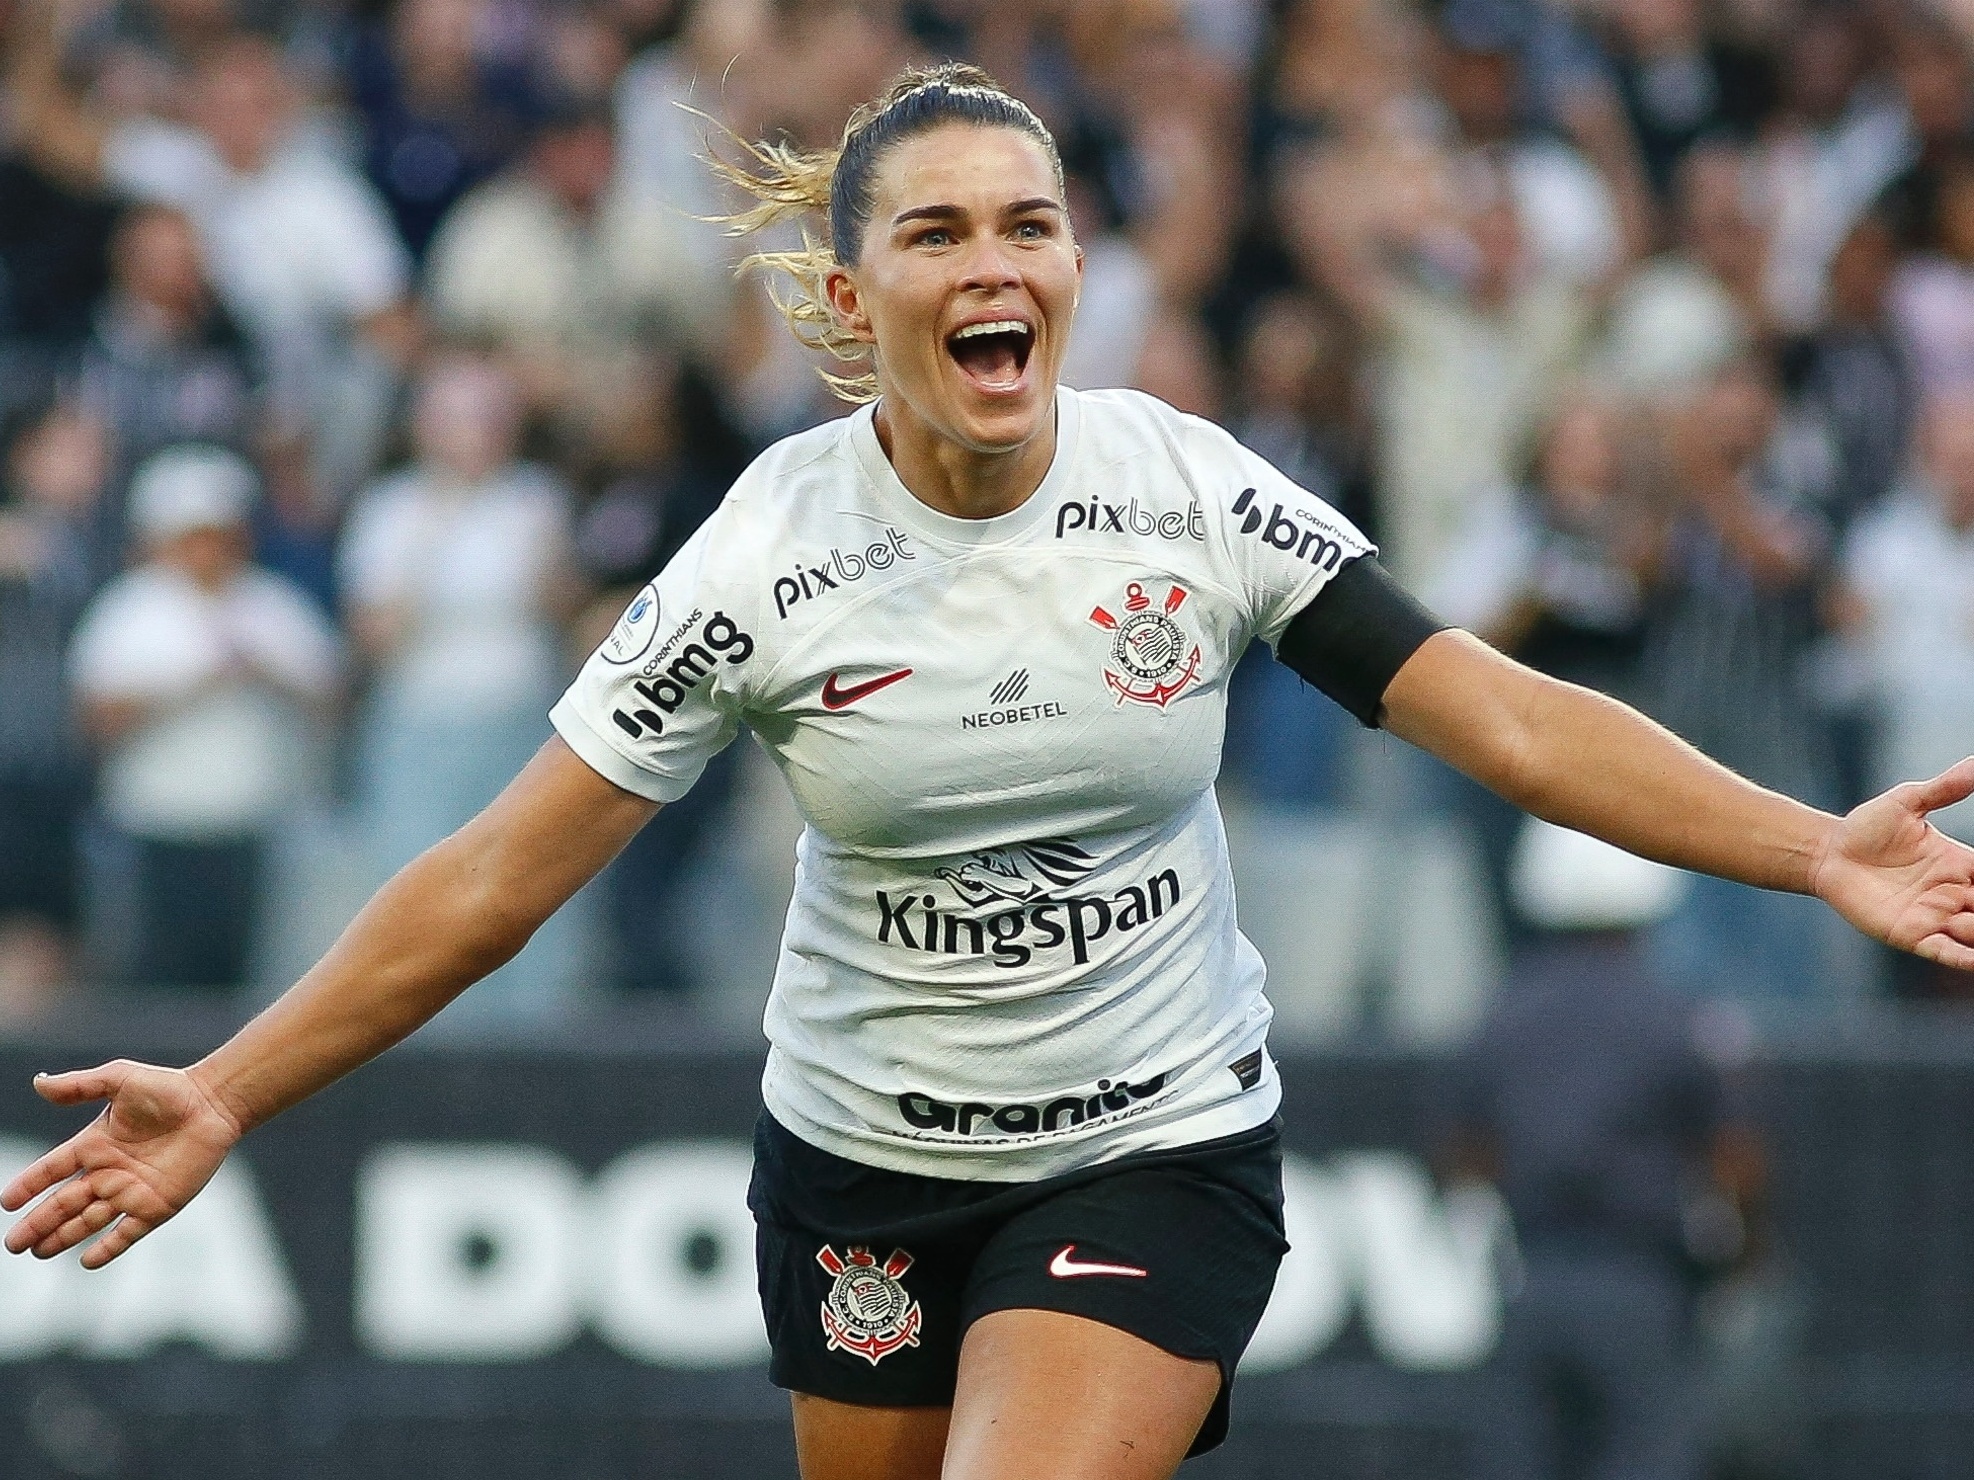 Futebol Feminino do Sport Club Corinthians Paulista